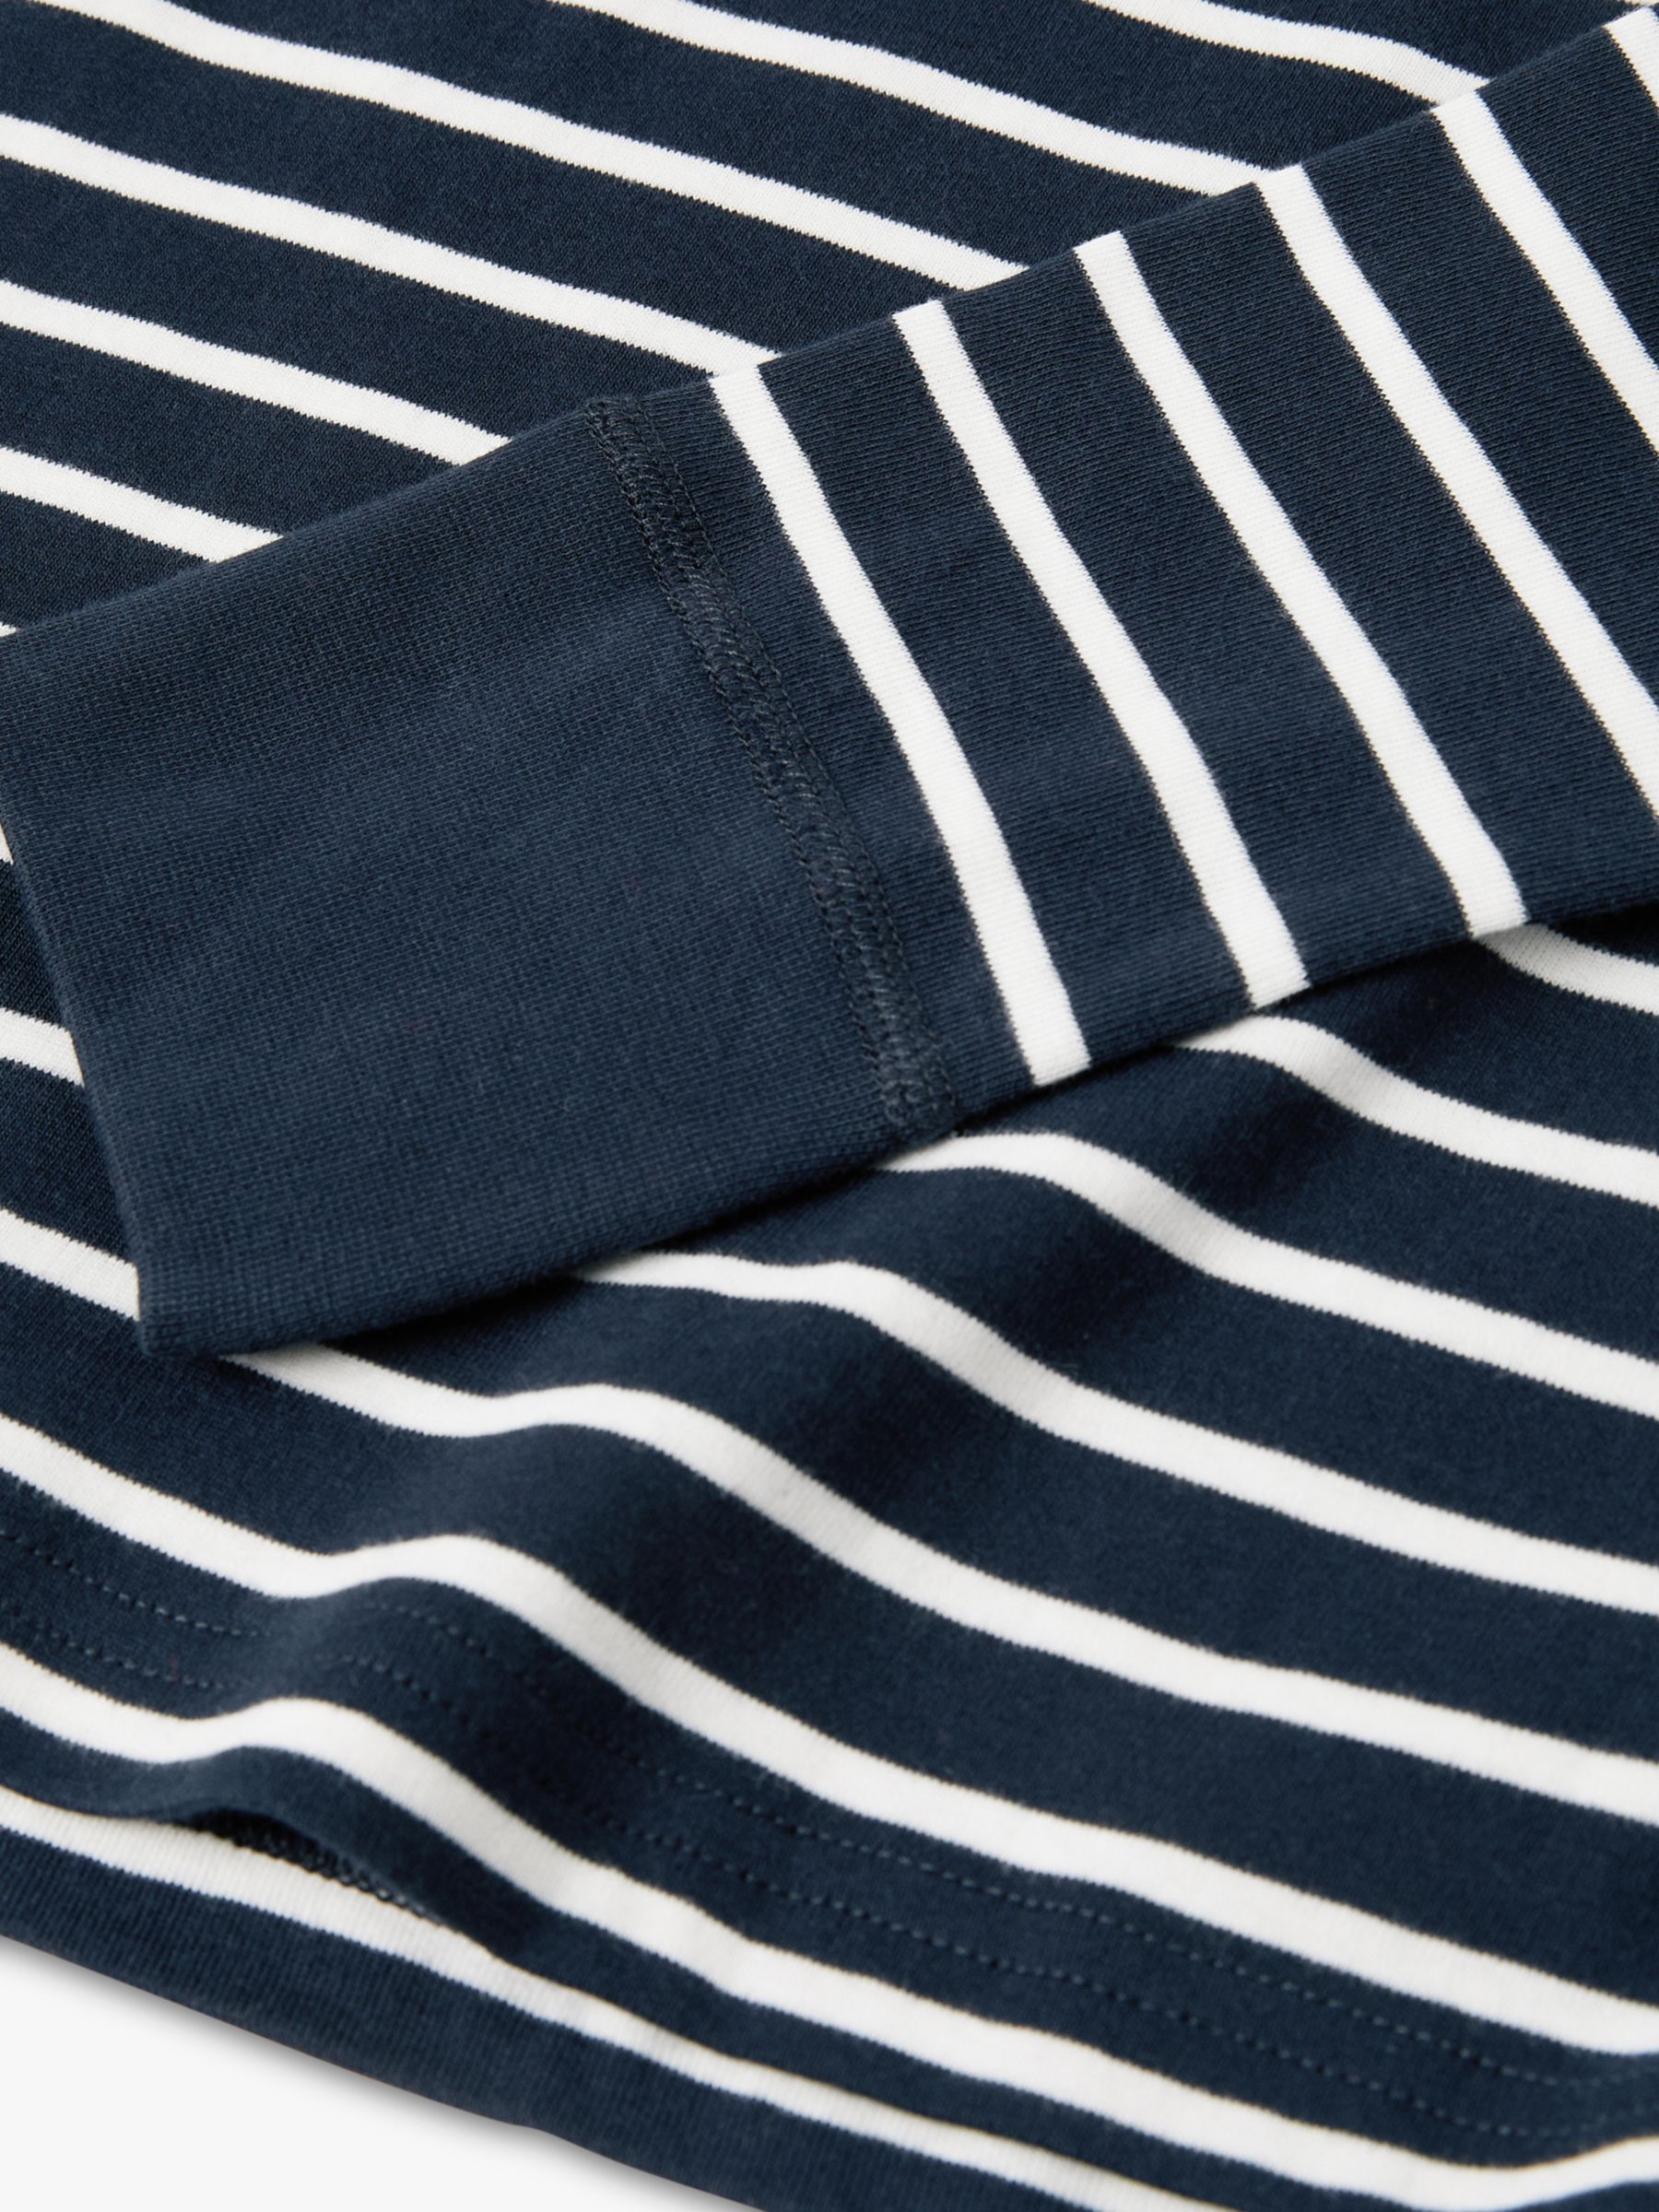 Buy Polarn O. Pyret Kids' Organic Cotton Stripe Long Sleeve T-Shirt, Blue Online at johnlewis.com